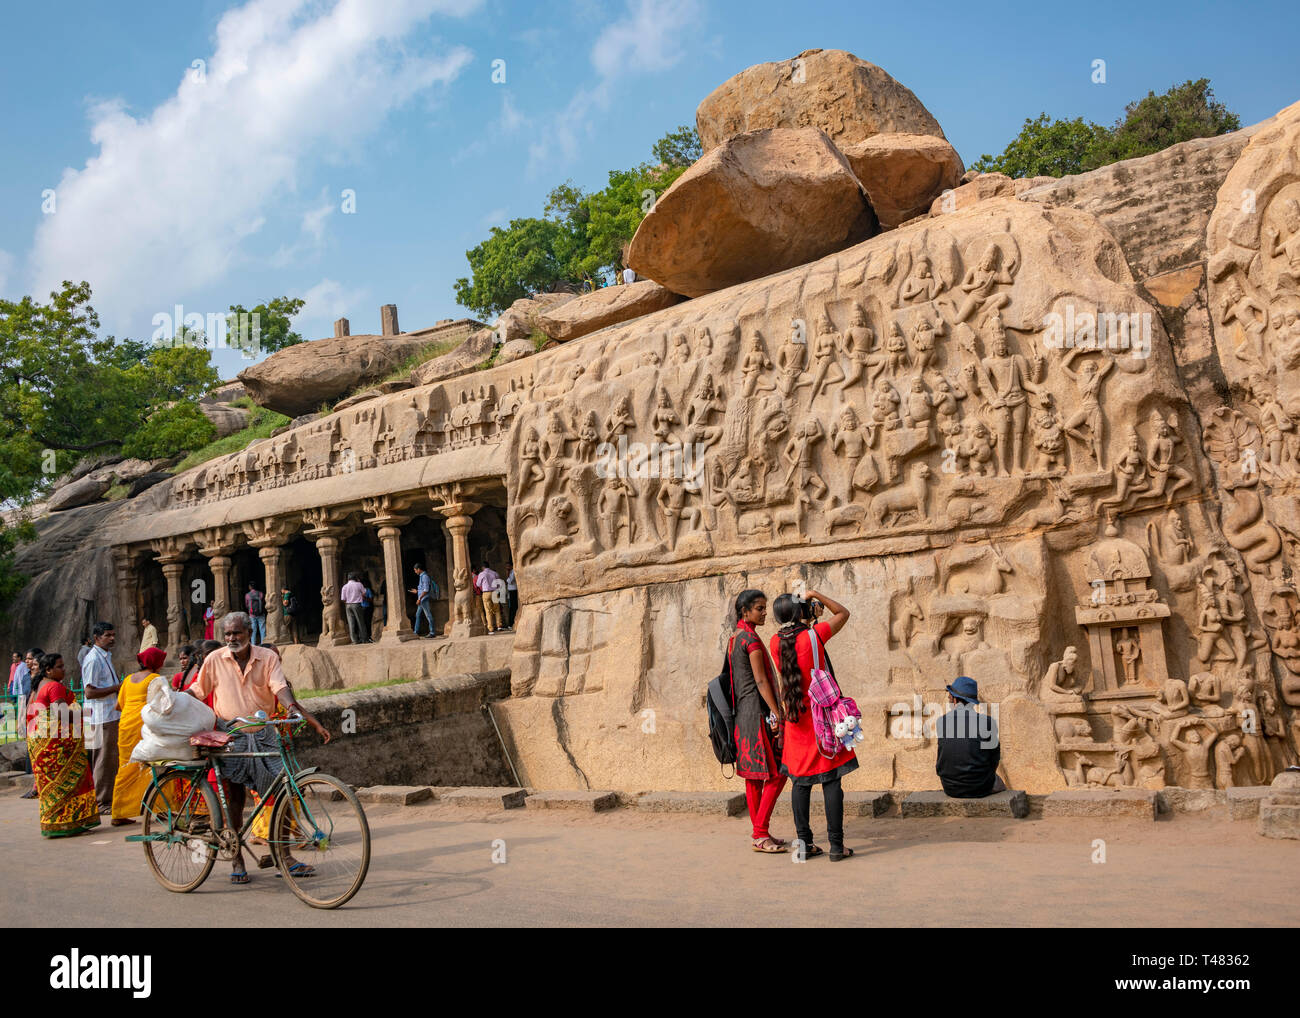 Horizontal view of the spectacular Arjuna's Penance at Mahabalipuram, India. Stock Photo